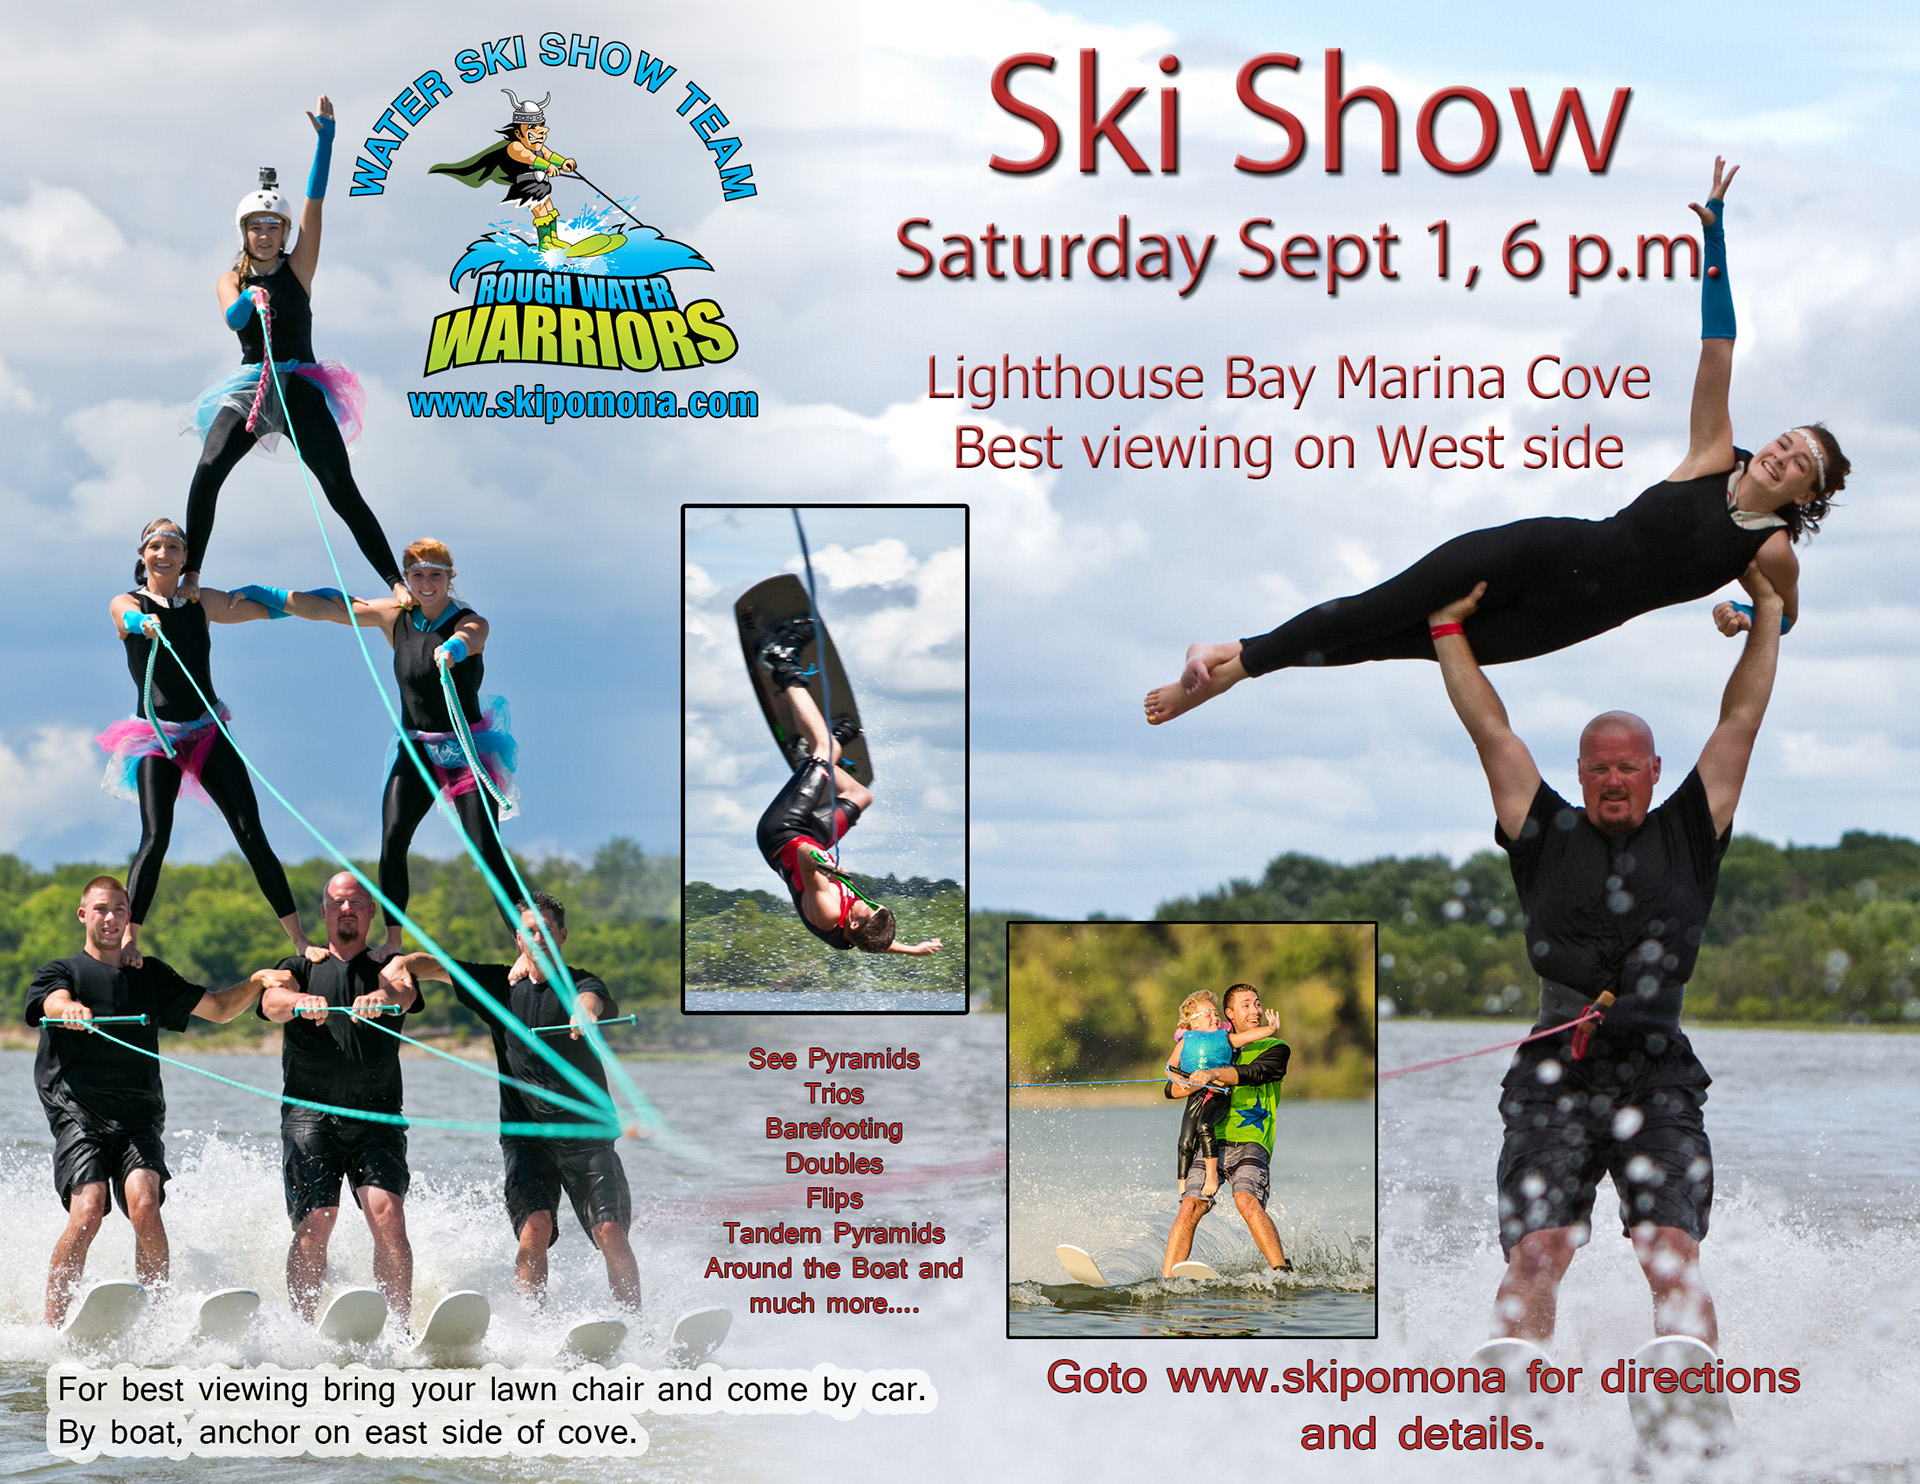 Ski Show Sunday Sept 1st, 6:00 Lighthouse Bay Marina Cove.